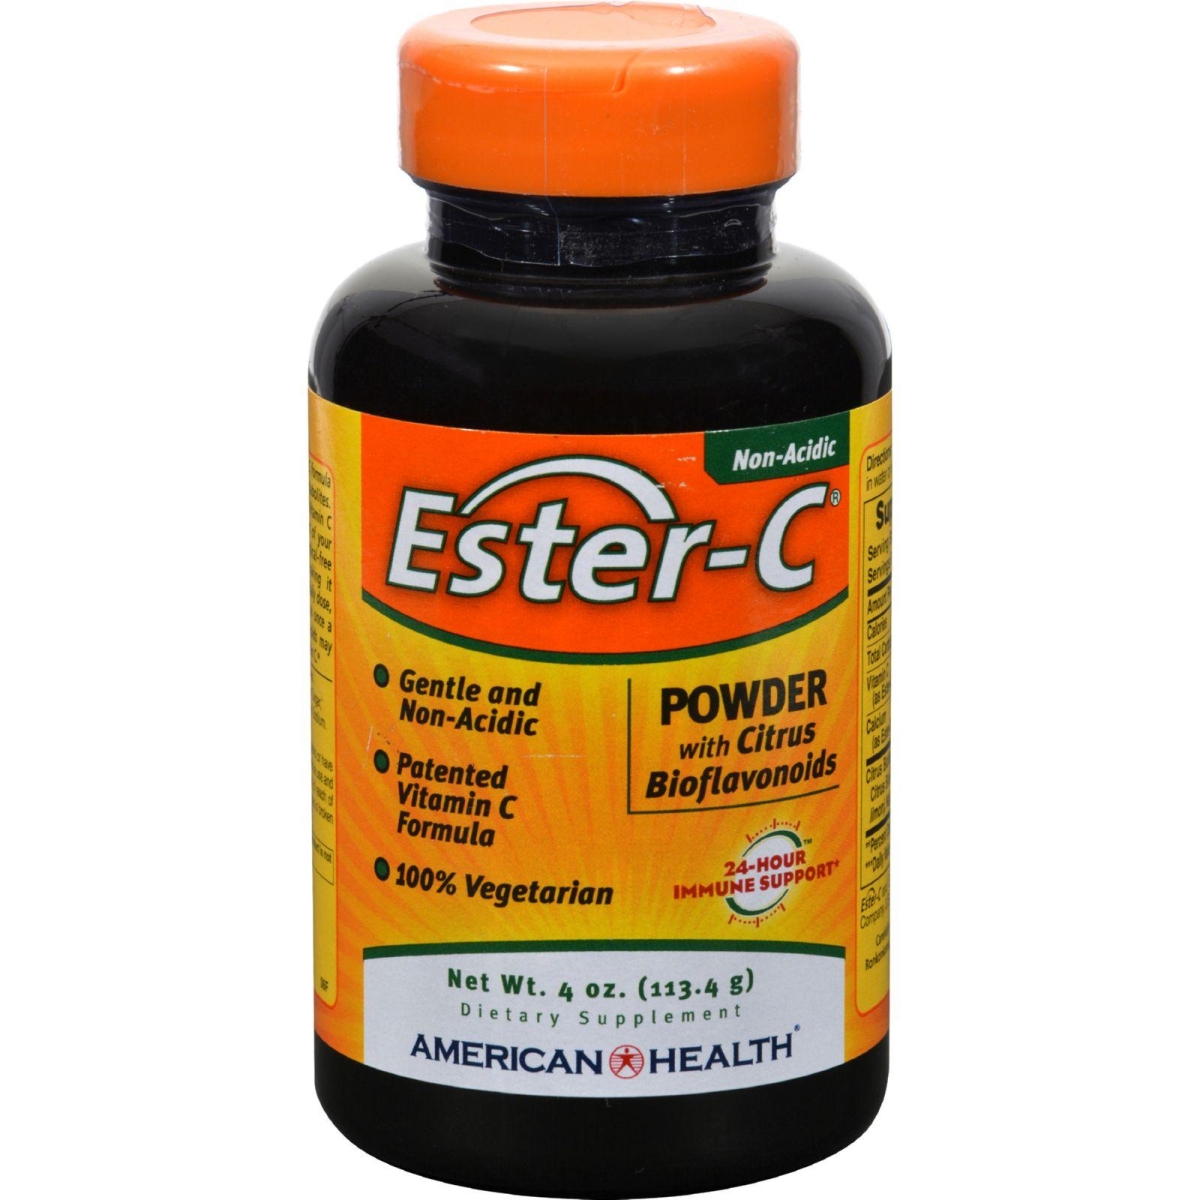 Picture of American Health HG0888578 4 oz Ester-c Powder with Citrus Bioflavonoids